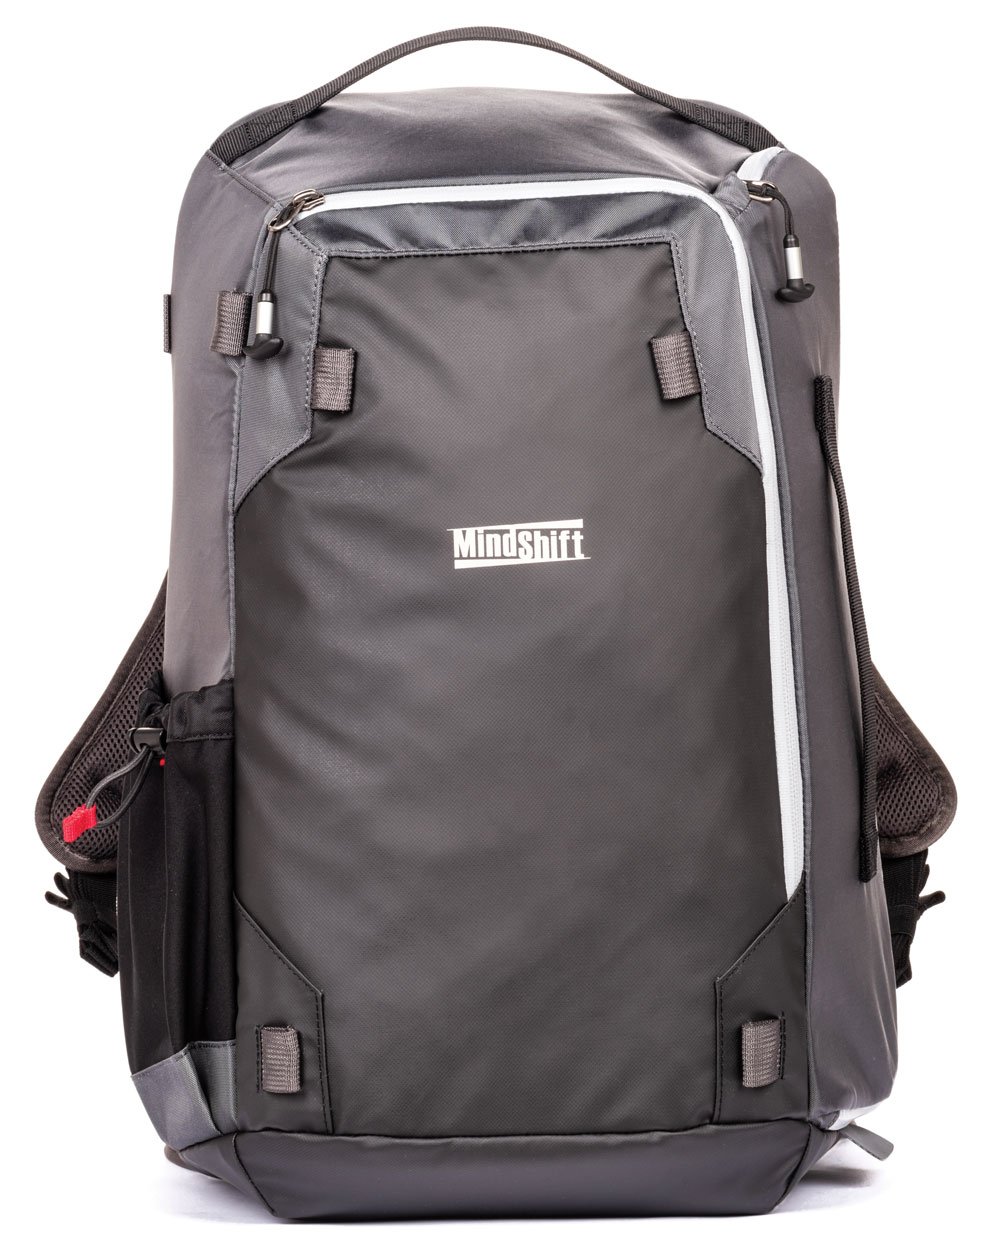 MindShift Gear Photocross Backpack 